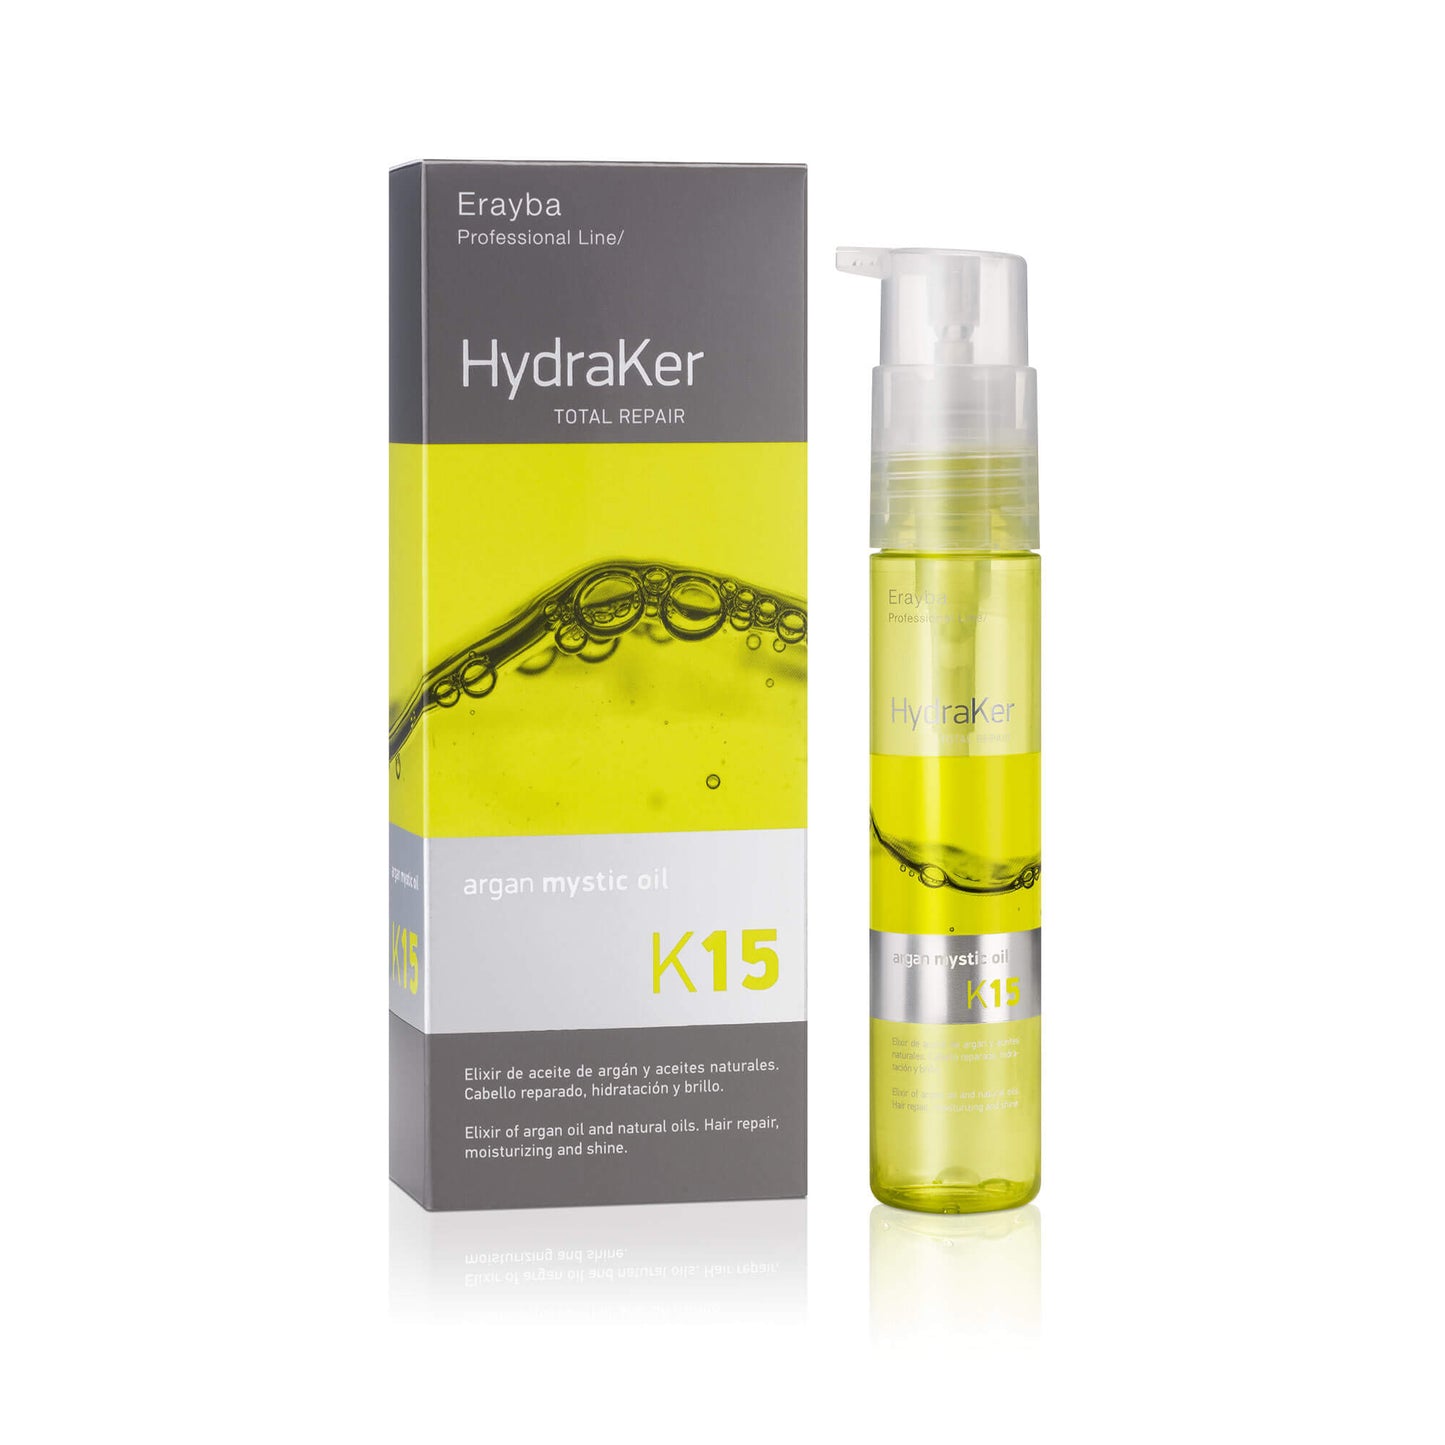 HydraKer K15 argan mystic oil